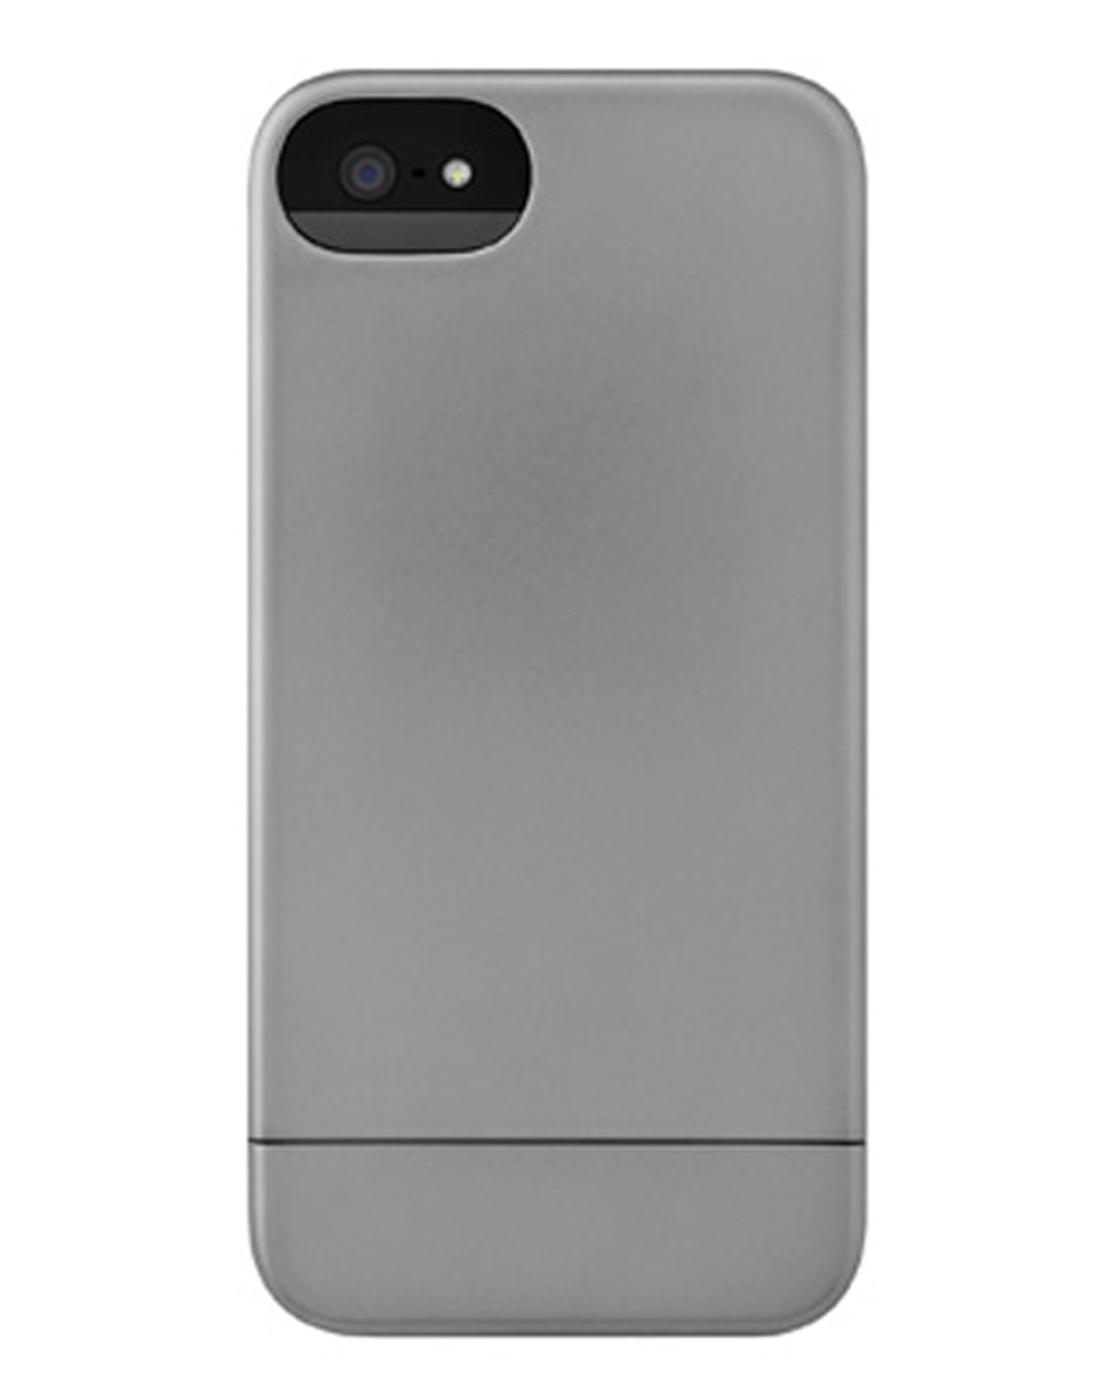 Foto Funda de iPhone 5 gris metalizado Slider Case